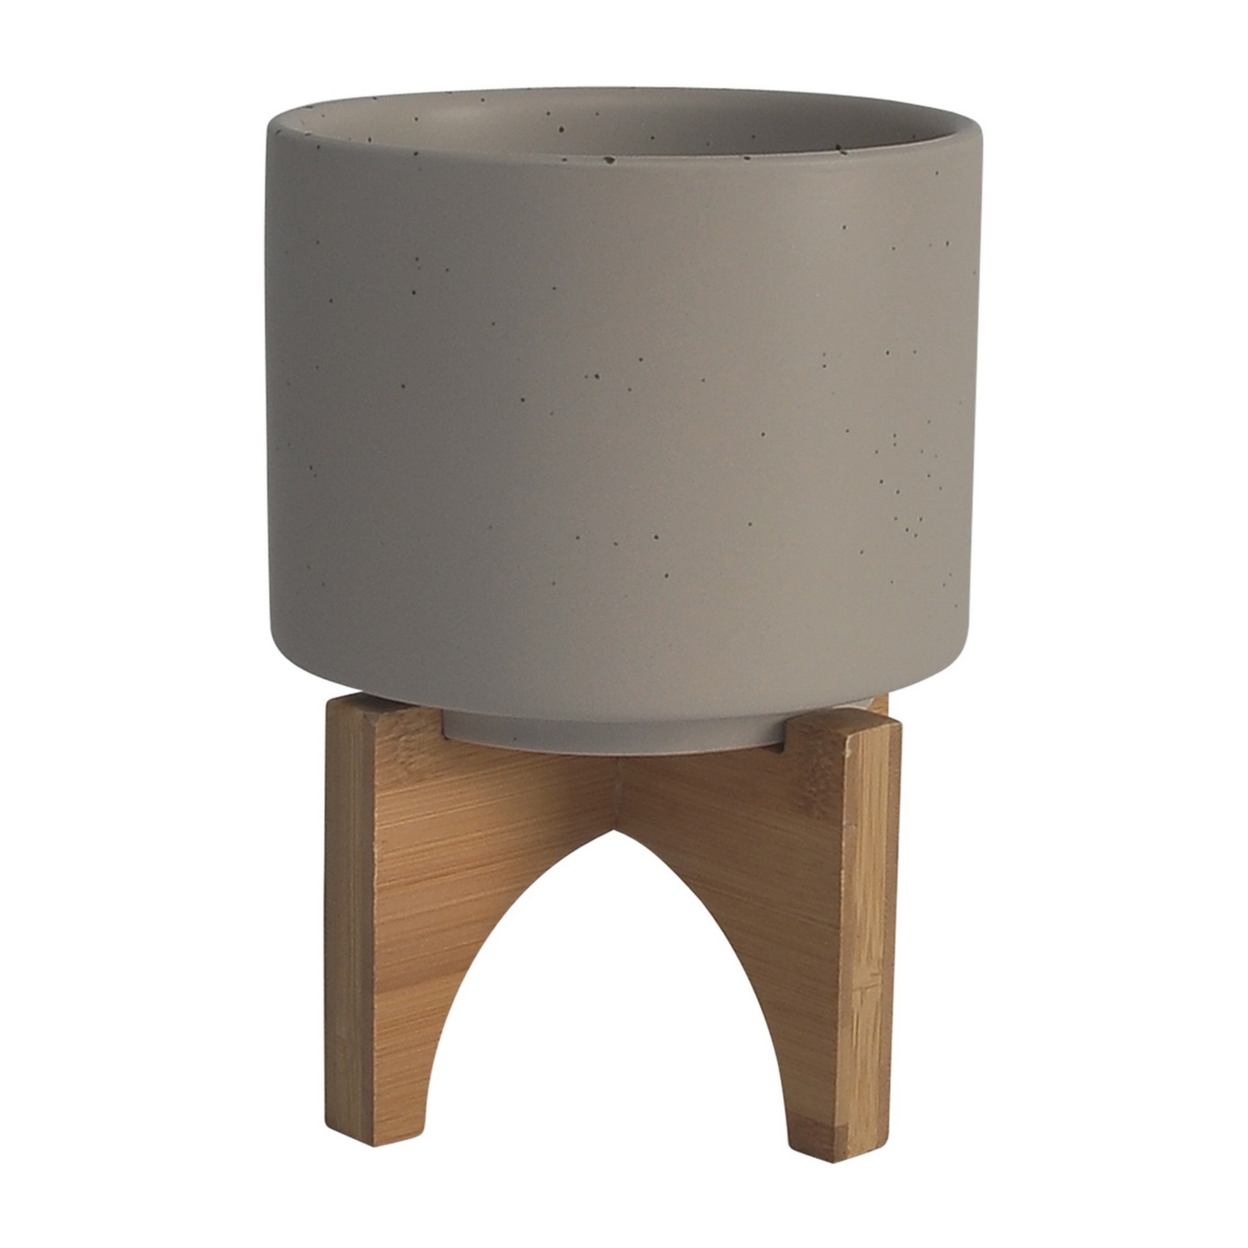 Ceramic Planter With Terrazzo Design And Wooden Stand, Gray- Saltoro Sherpi